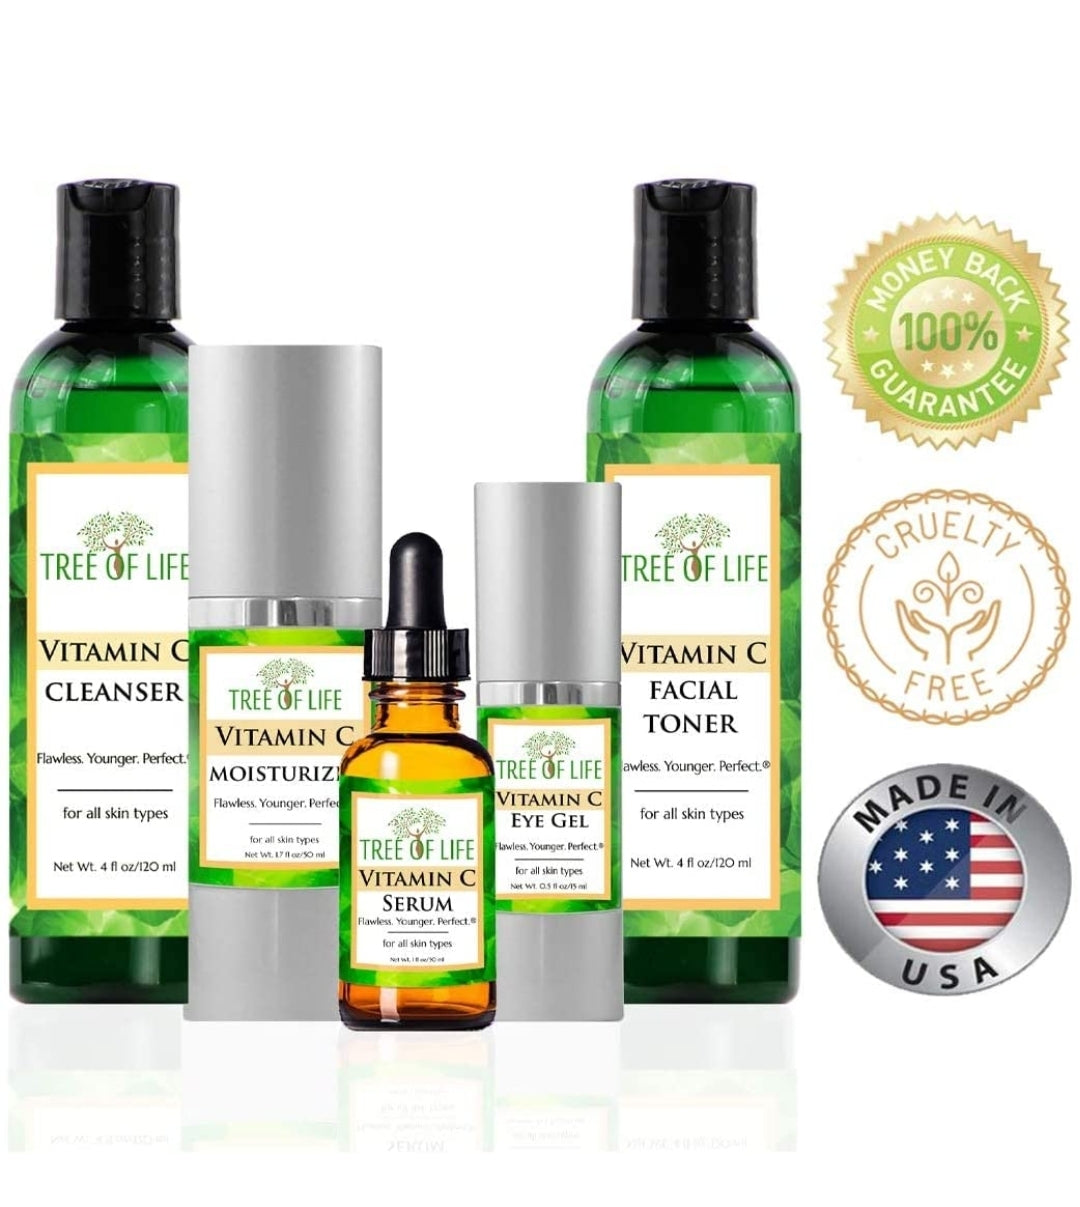 Tree of Life Vitamin C Complete Regimen | Includes Cleanser, Toner, Serum, Face Cream and Eye Gel